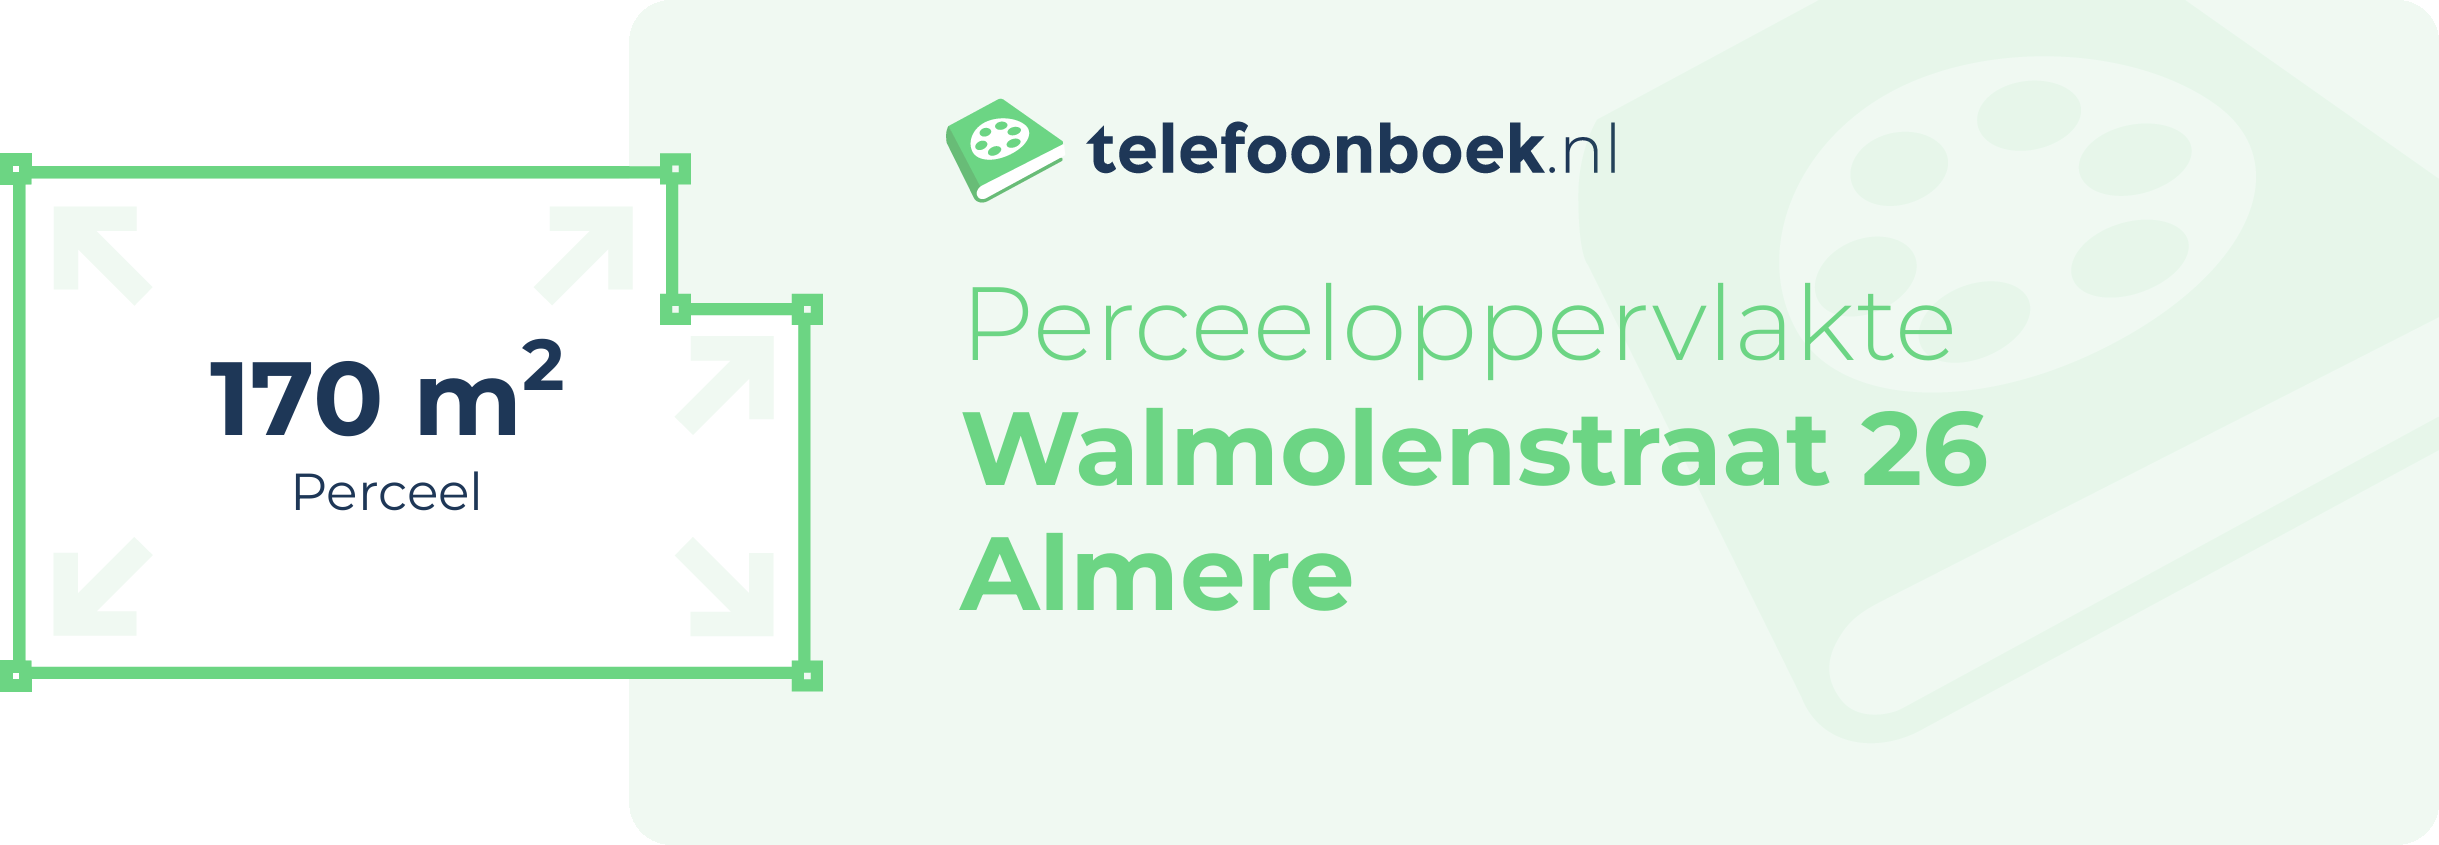 Perceeloppervlakte Walmolenstraat 26 Almere